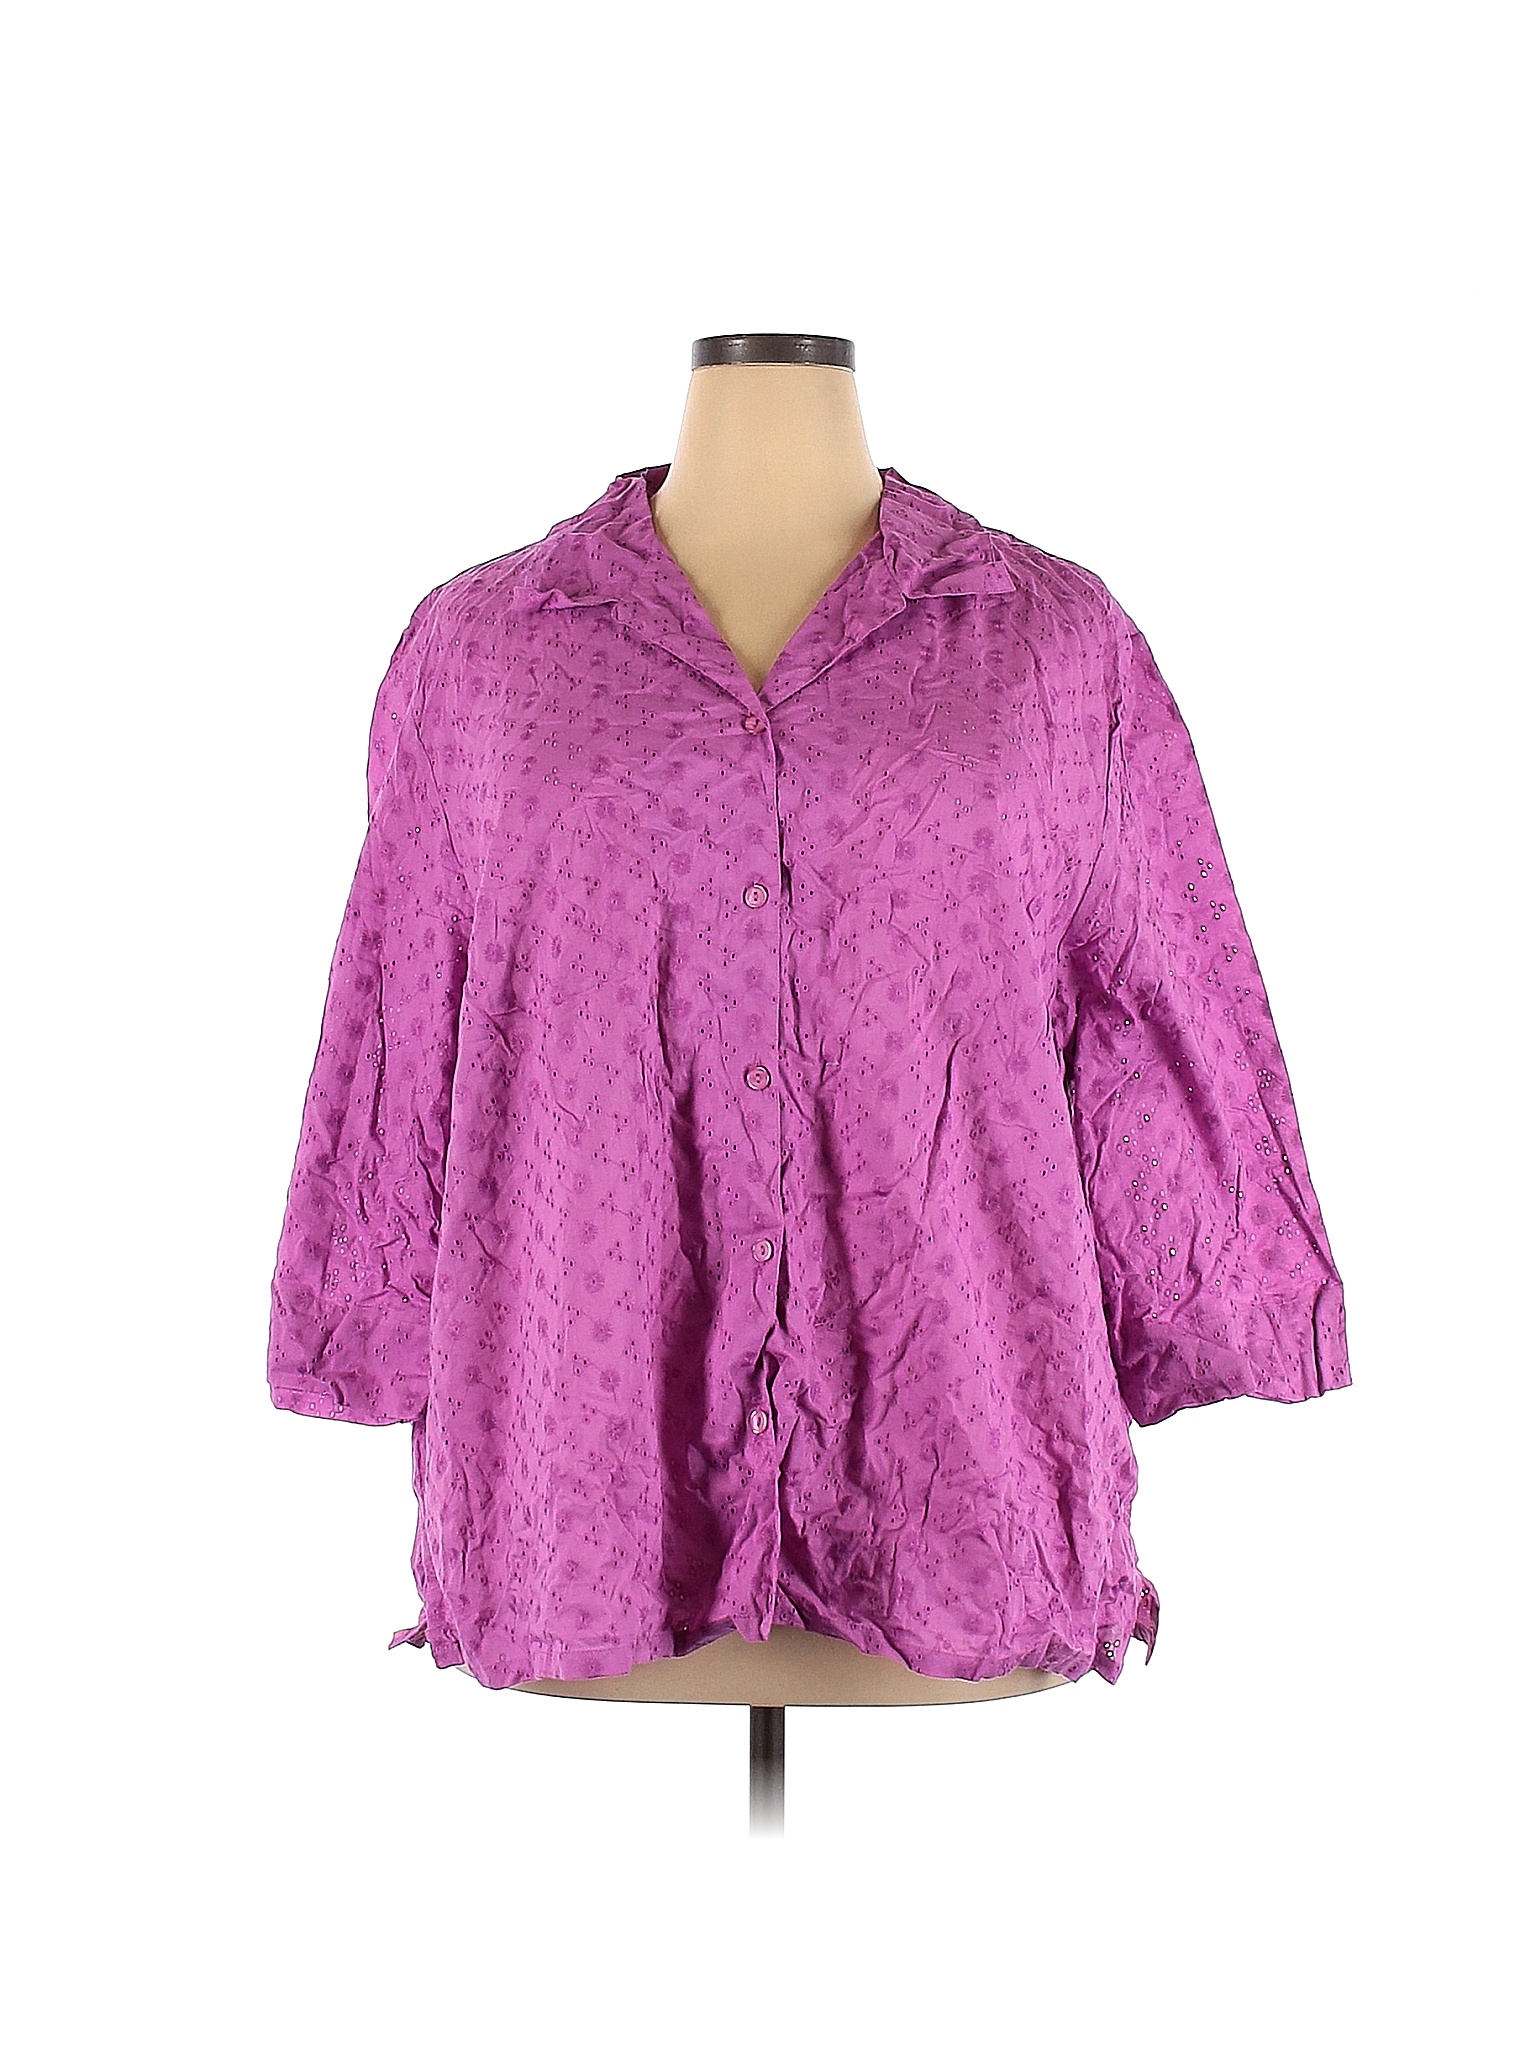 Koret 100% Cotton Colored Purple Long Sleeve Button-Down Shirt Size 28 ...